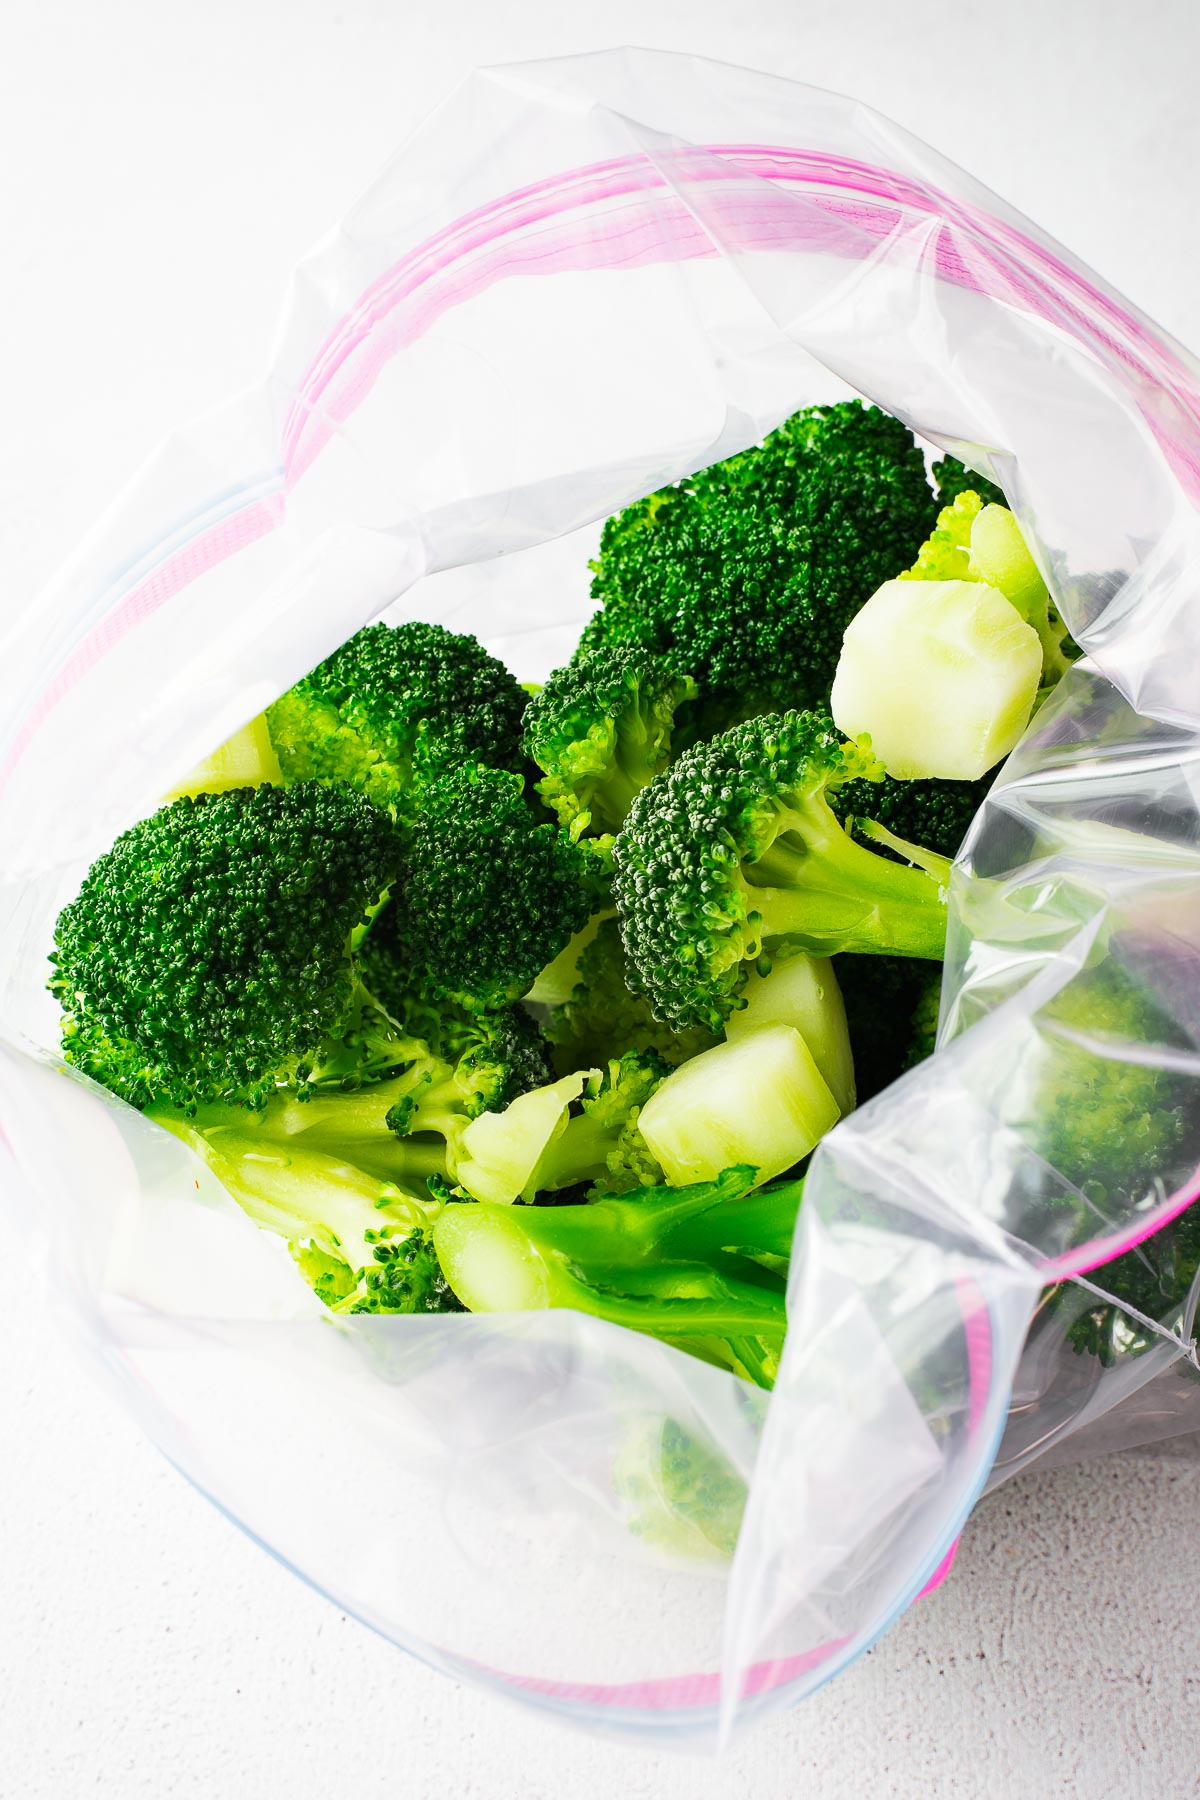 Frozen broccoli florets in a freezer bag.